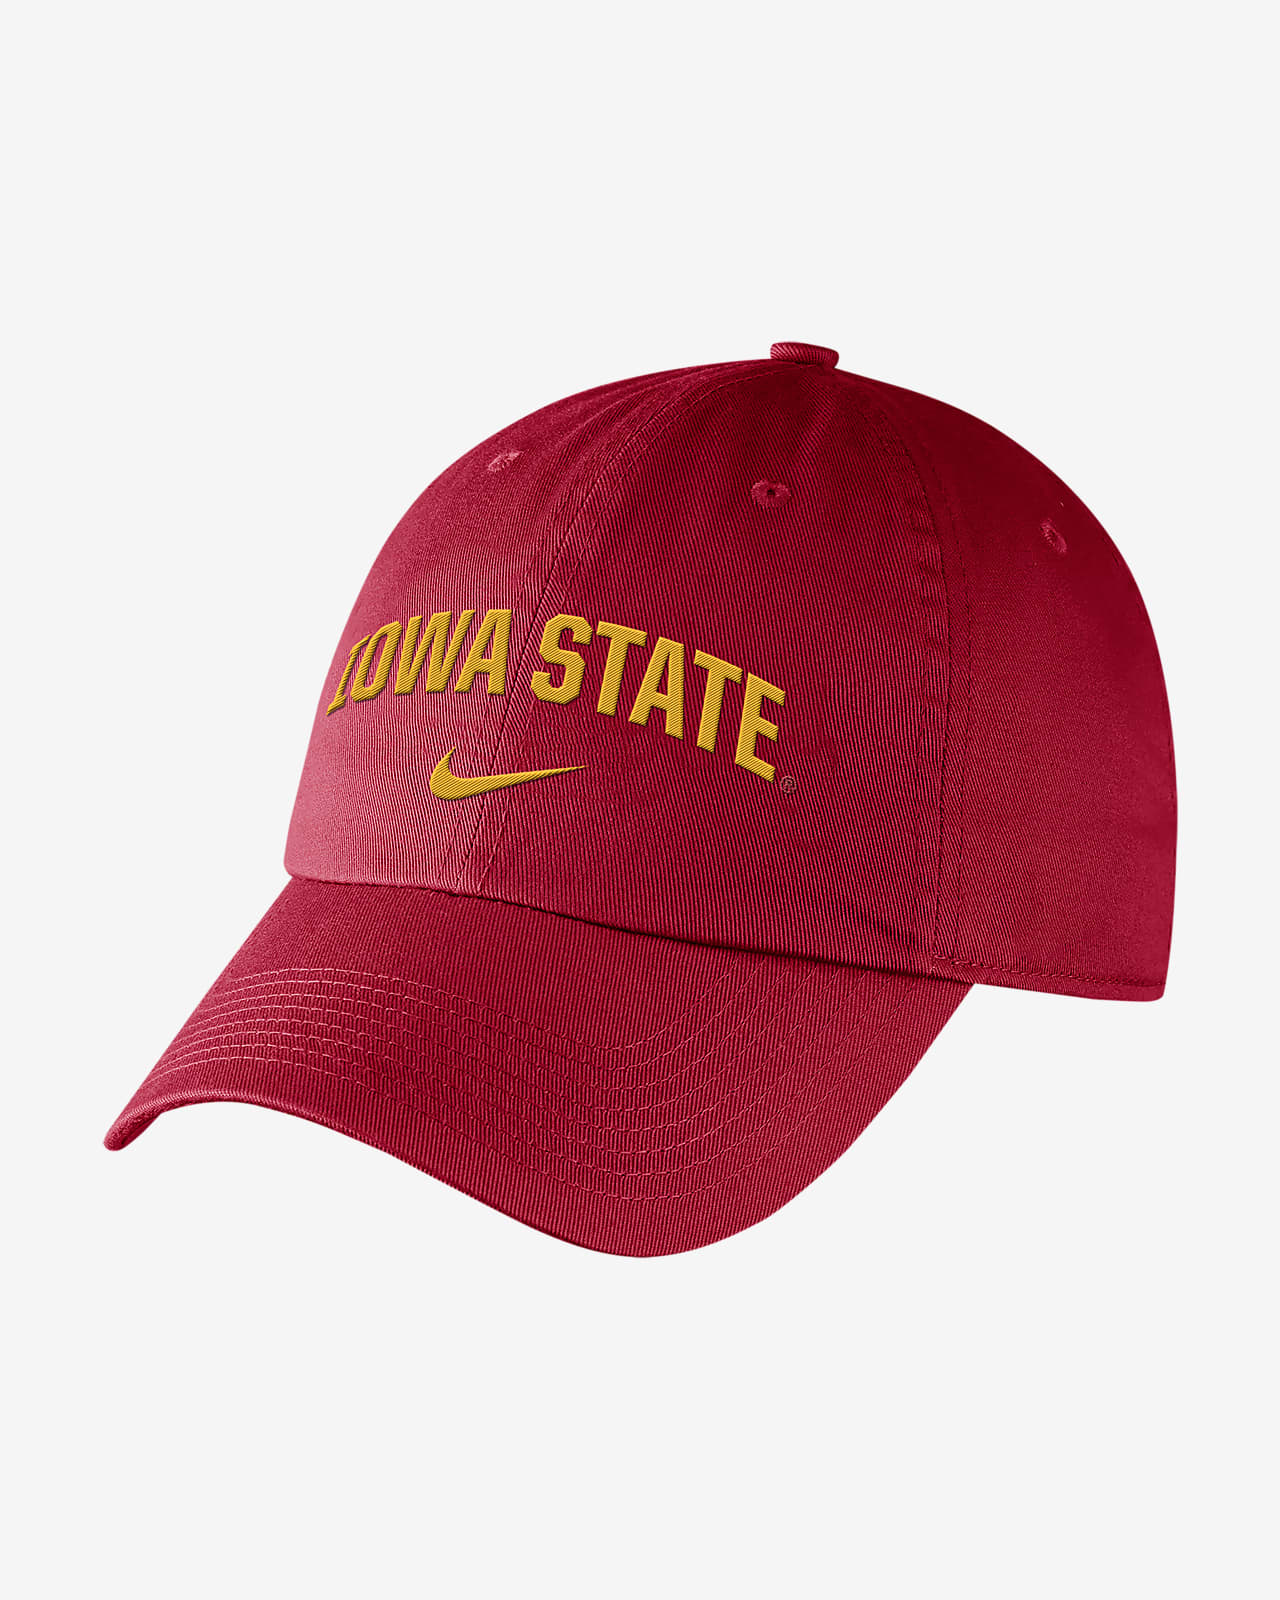 Nike College (Iowa State) Hat